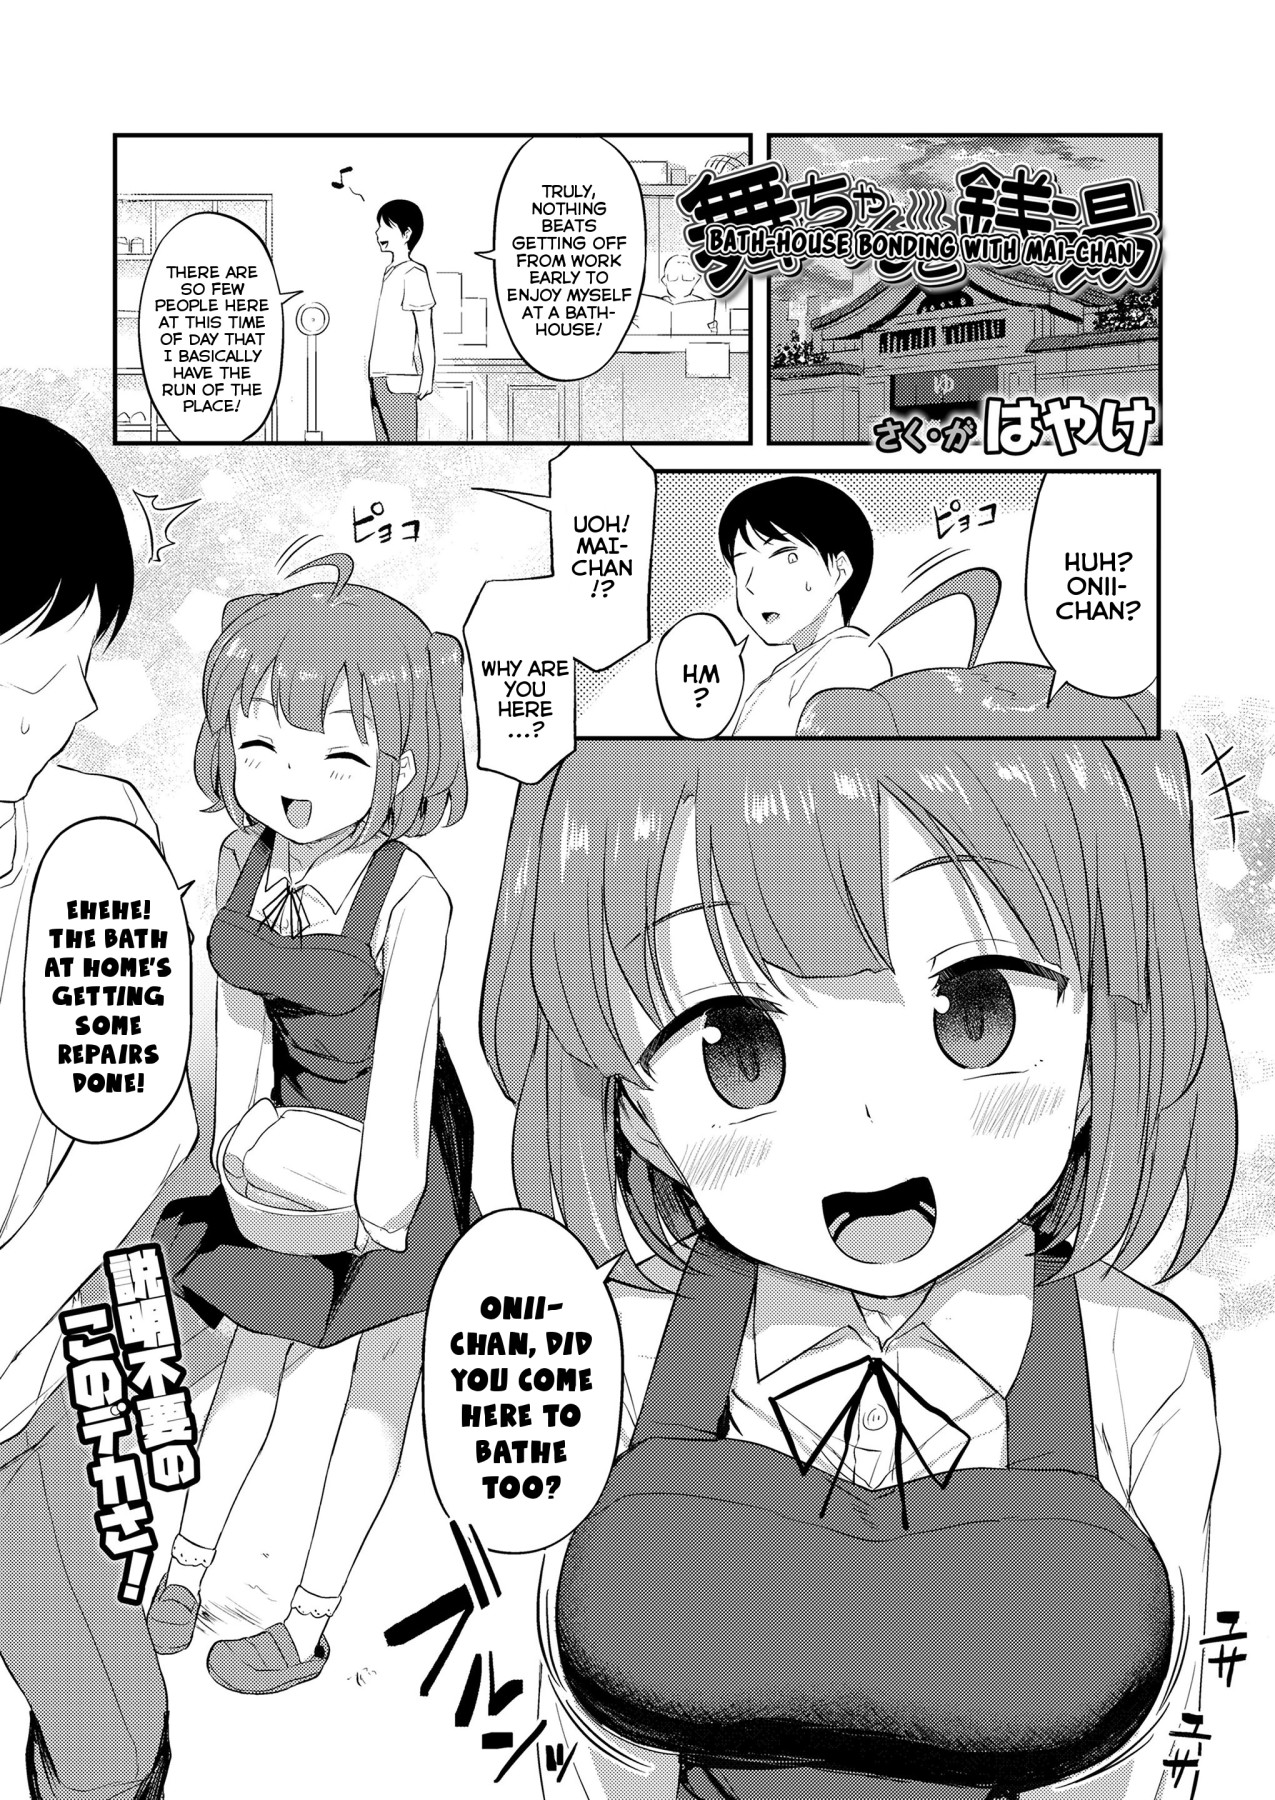 Hentai Manga Comic-Bath-House Bonding With Mai-chan-Read-1